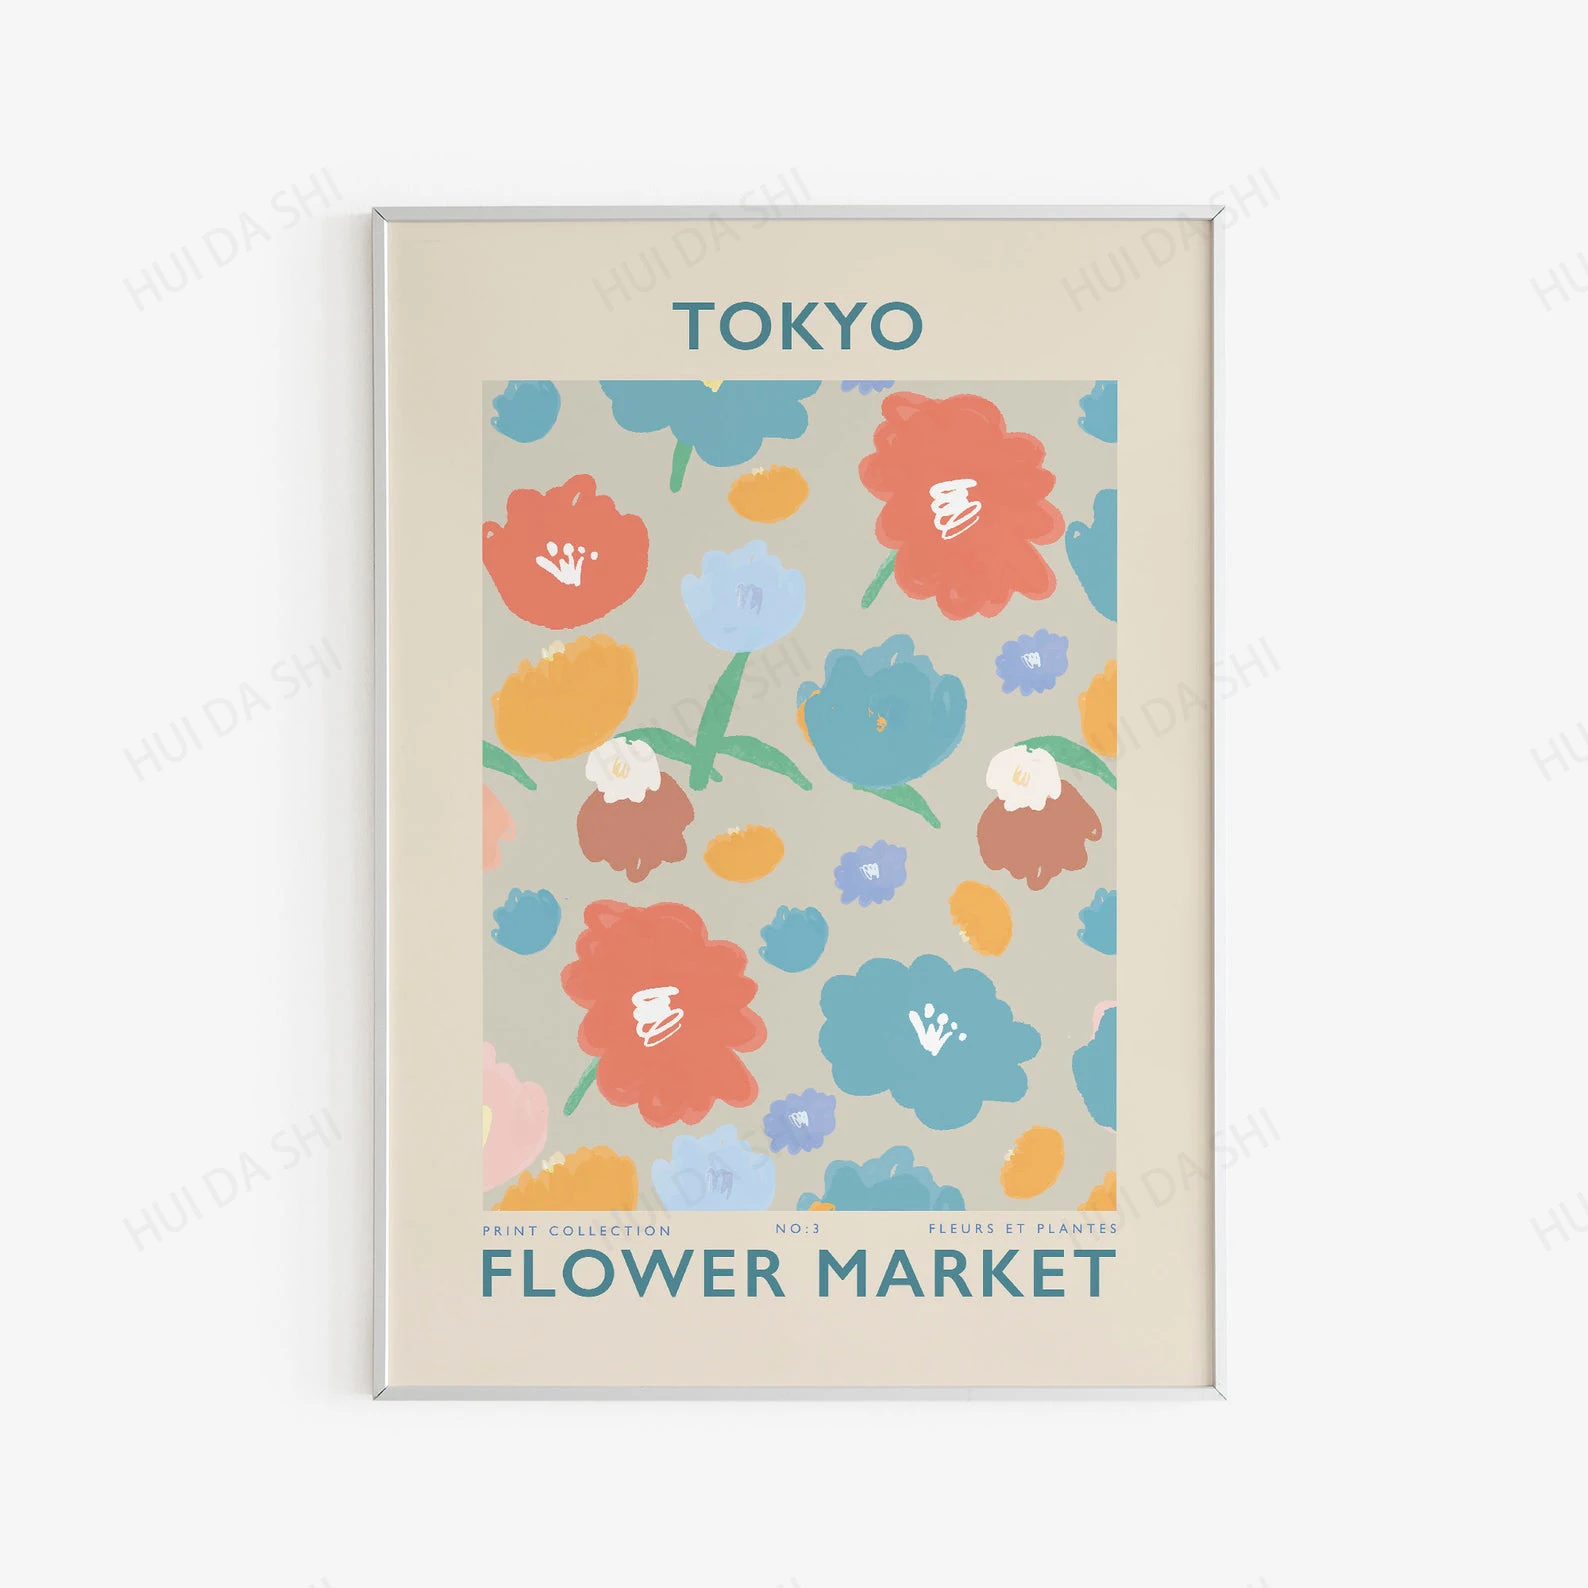 Tokyo flower market/ living room decor/Digital download/ flower art print